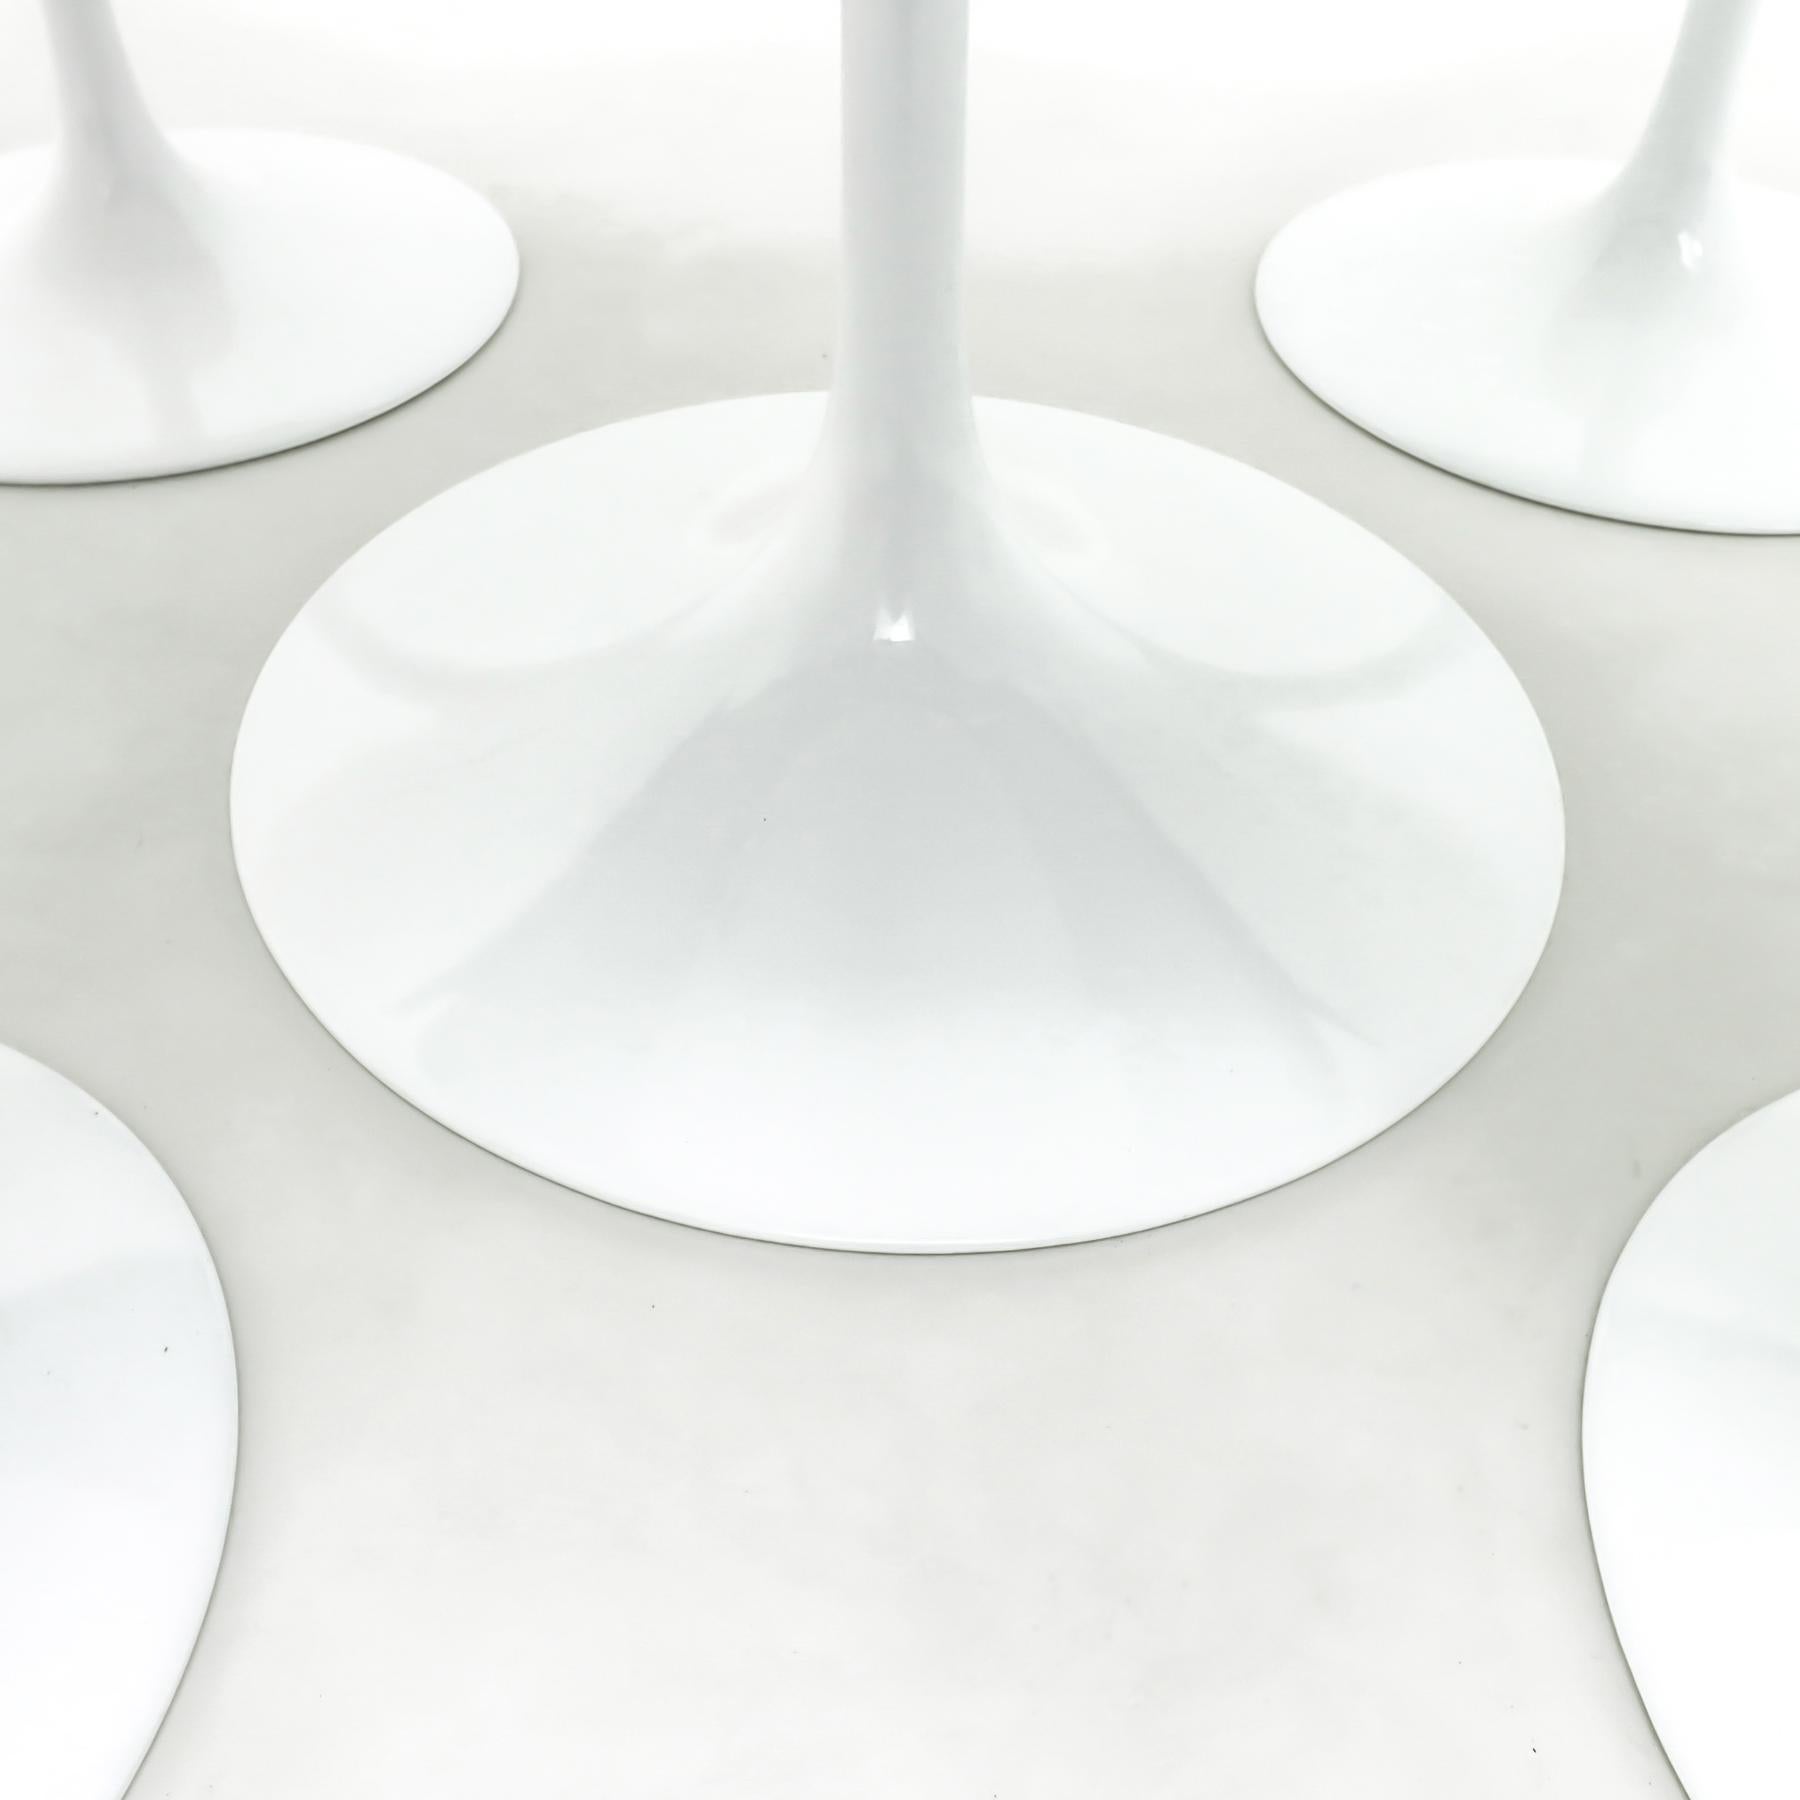 Vintage Eero Saarinen for Knoll Intl. tulip dining set with Verdi Alpi marble 1